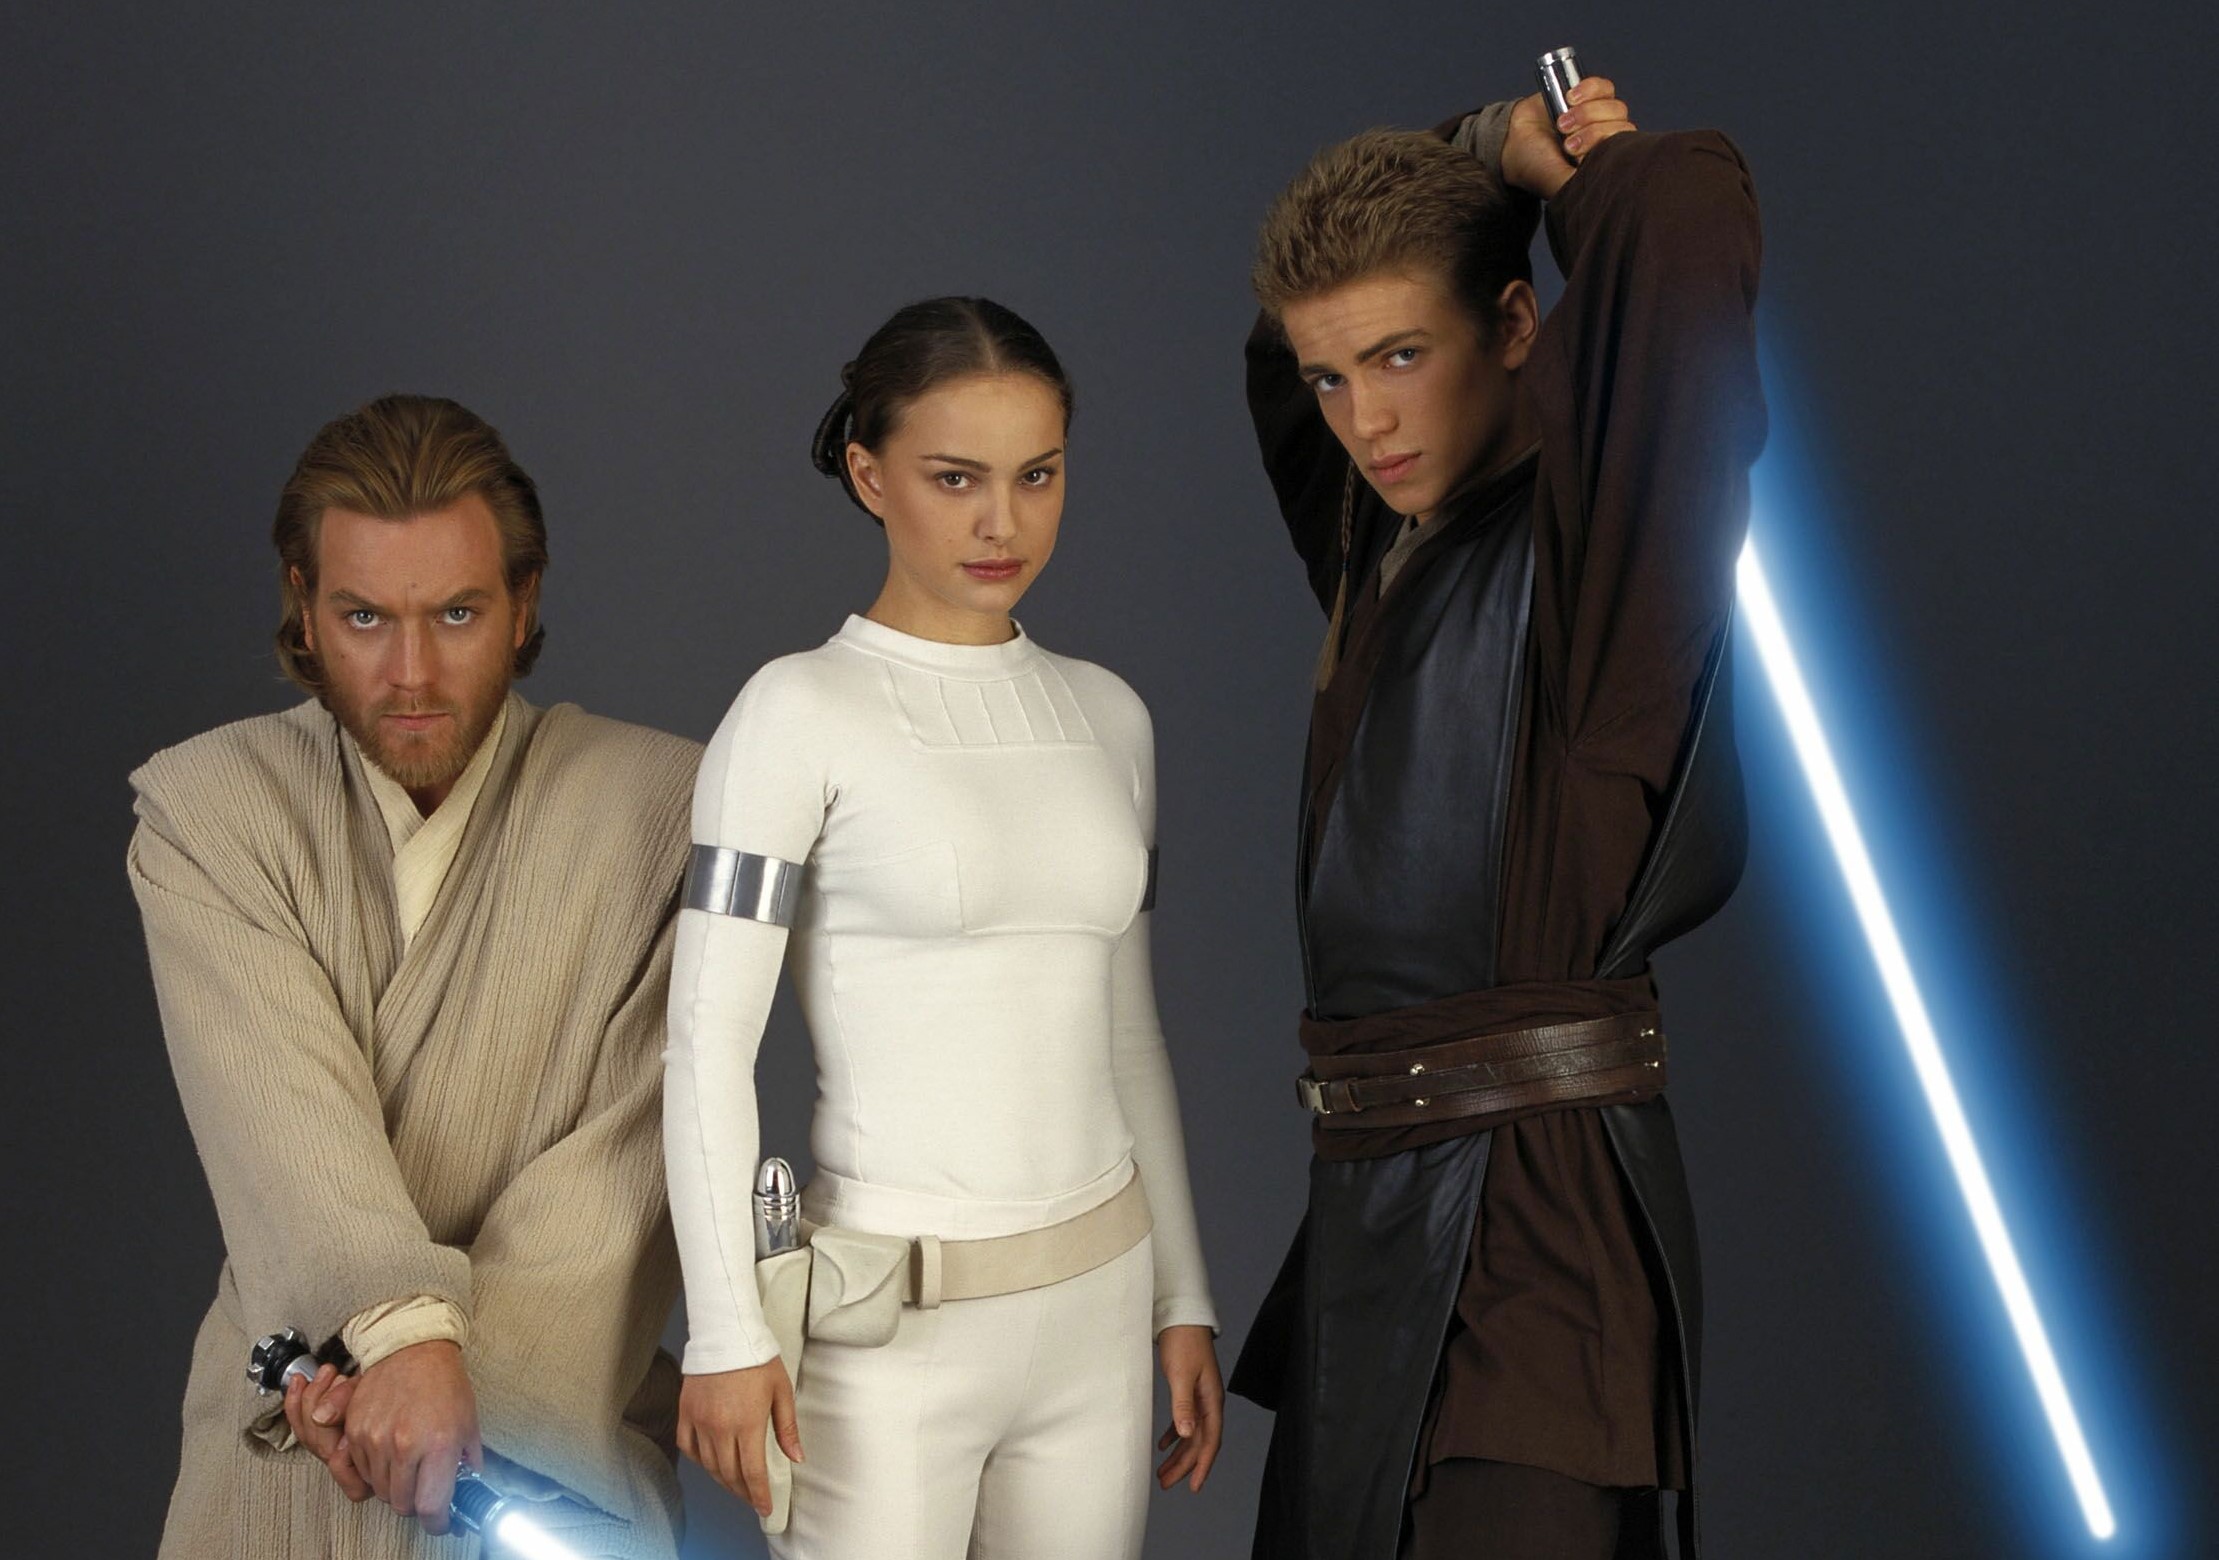 Movie Star Wars Episode II: Attack Of The Clones HD Wallpaper Background Im...